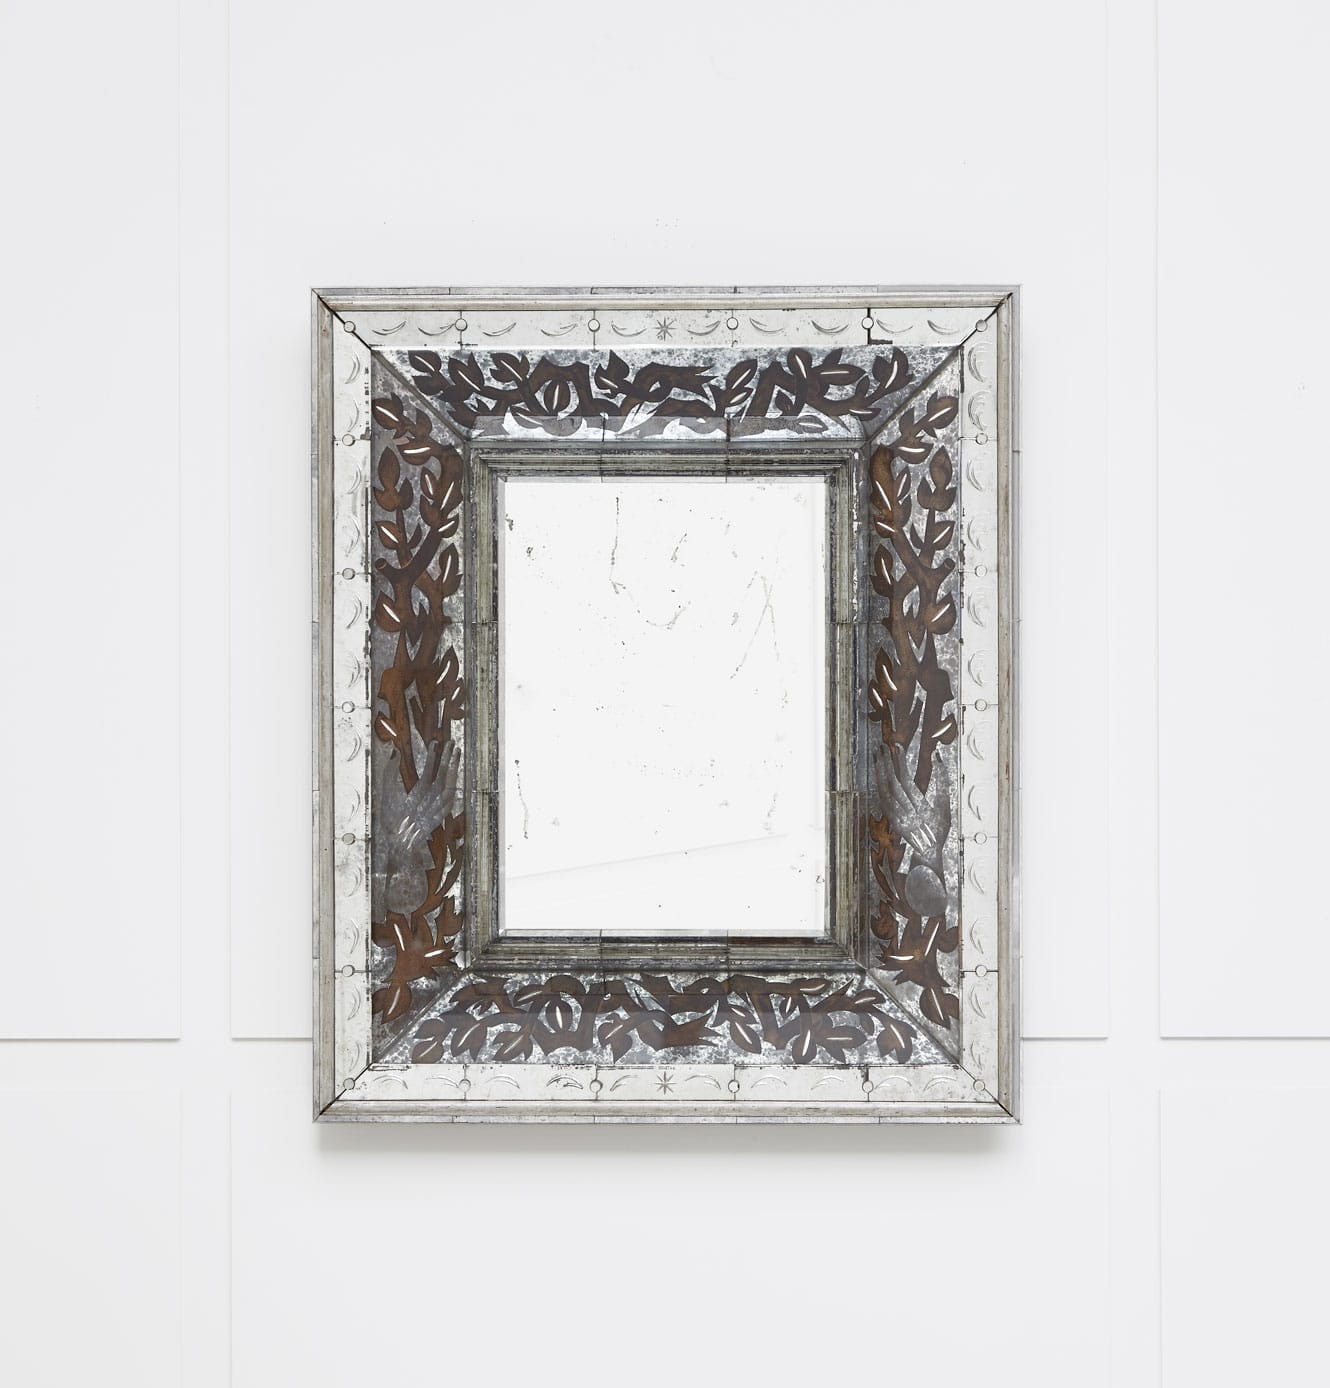 Max Ingrand, Rectangular mirror, vue 01